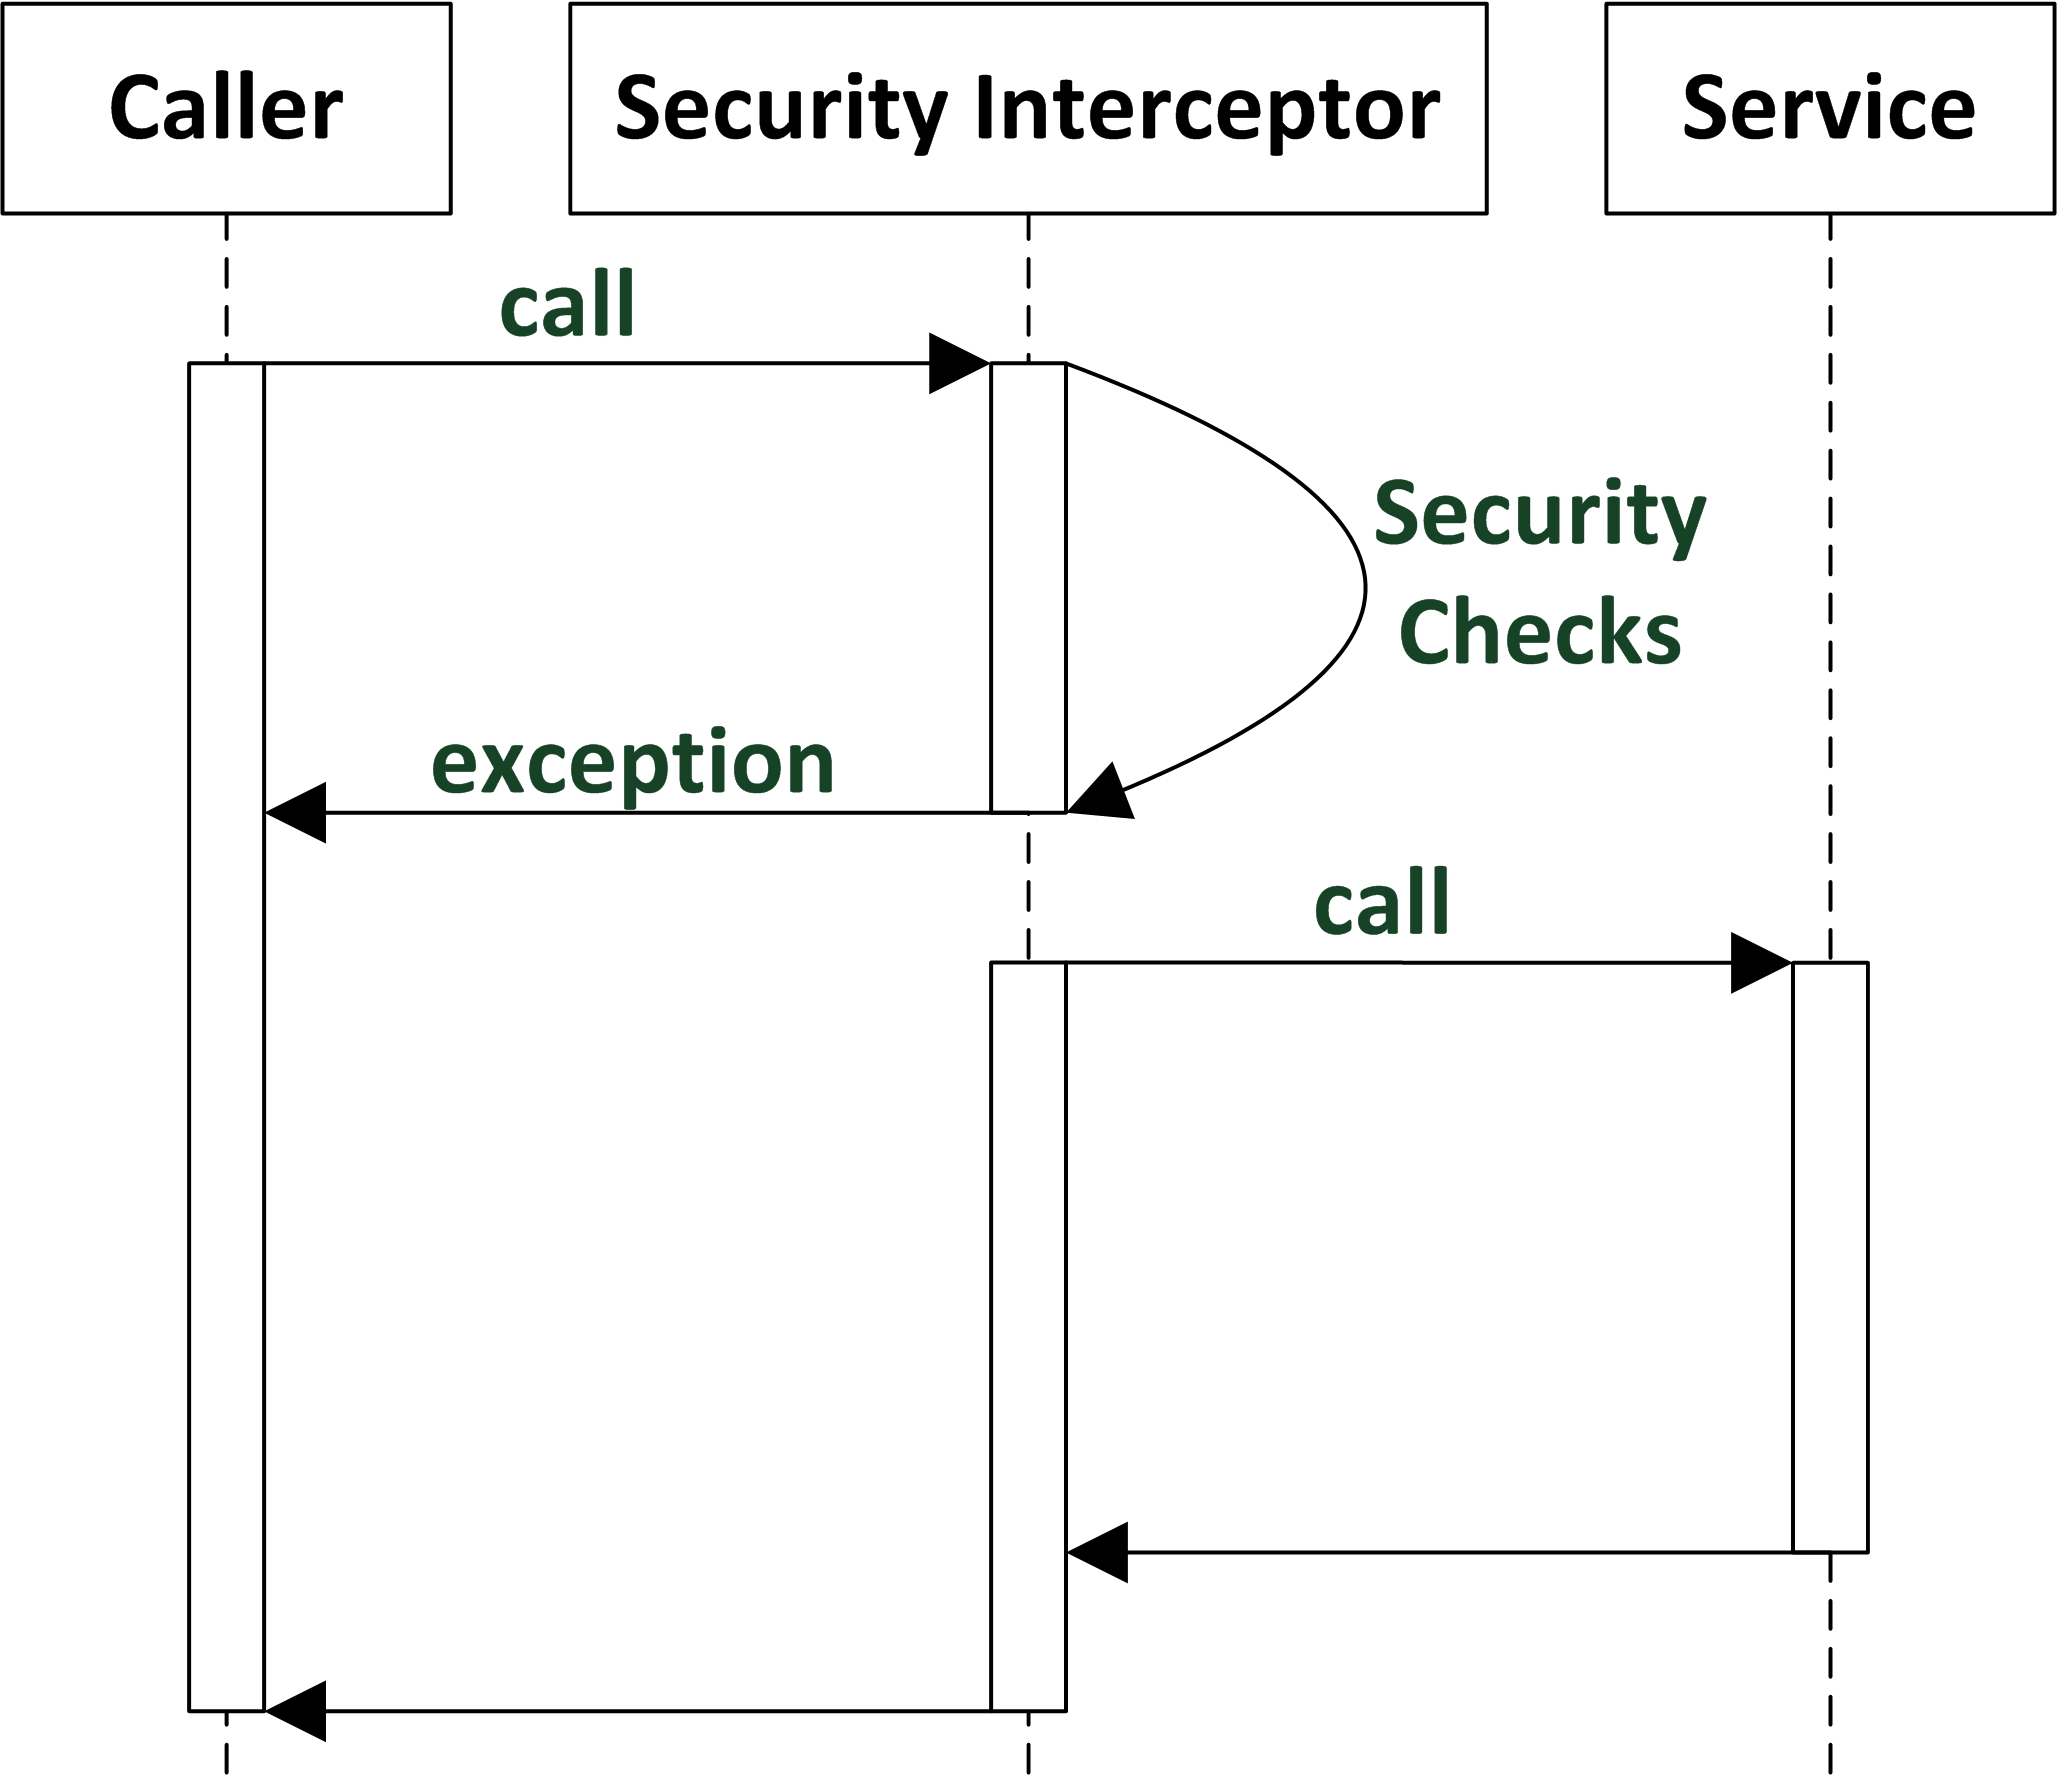 Figure 15-2. Spring's Security Interceptor in action